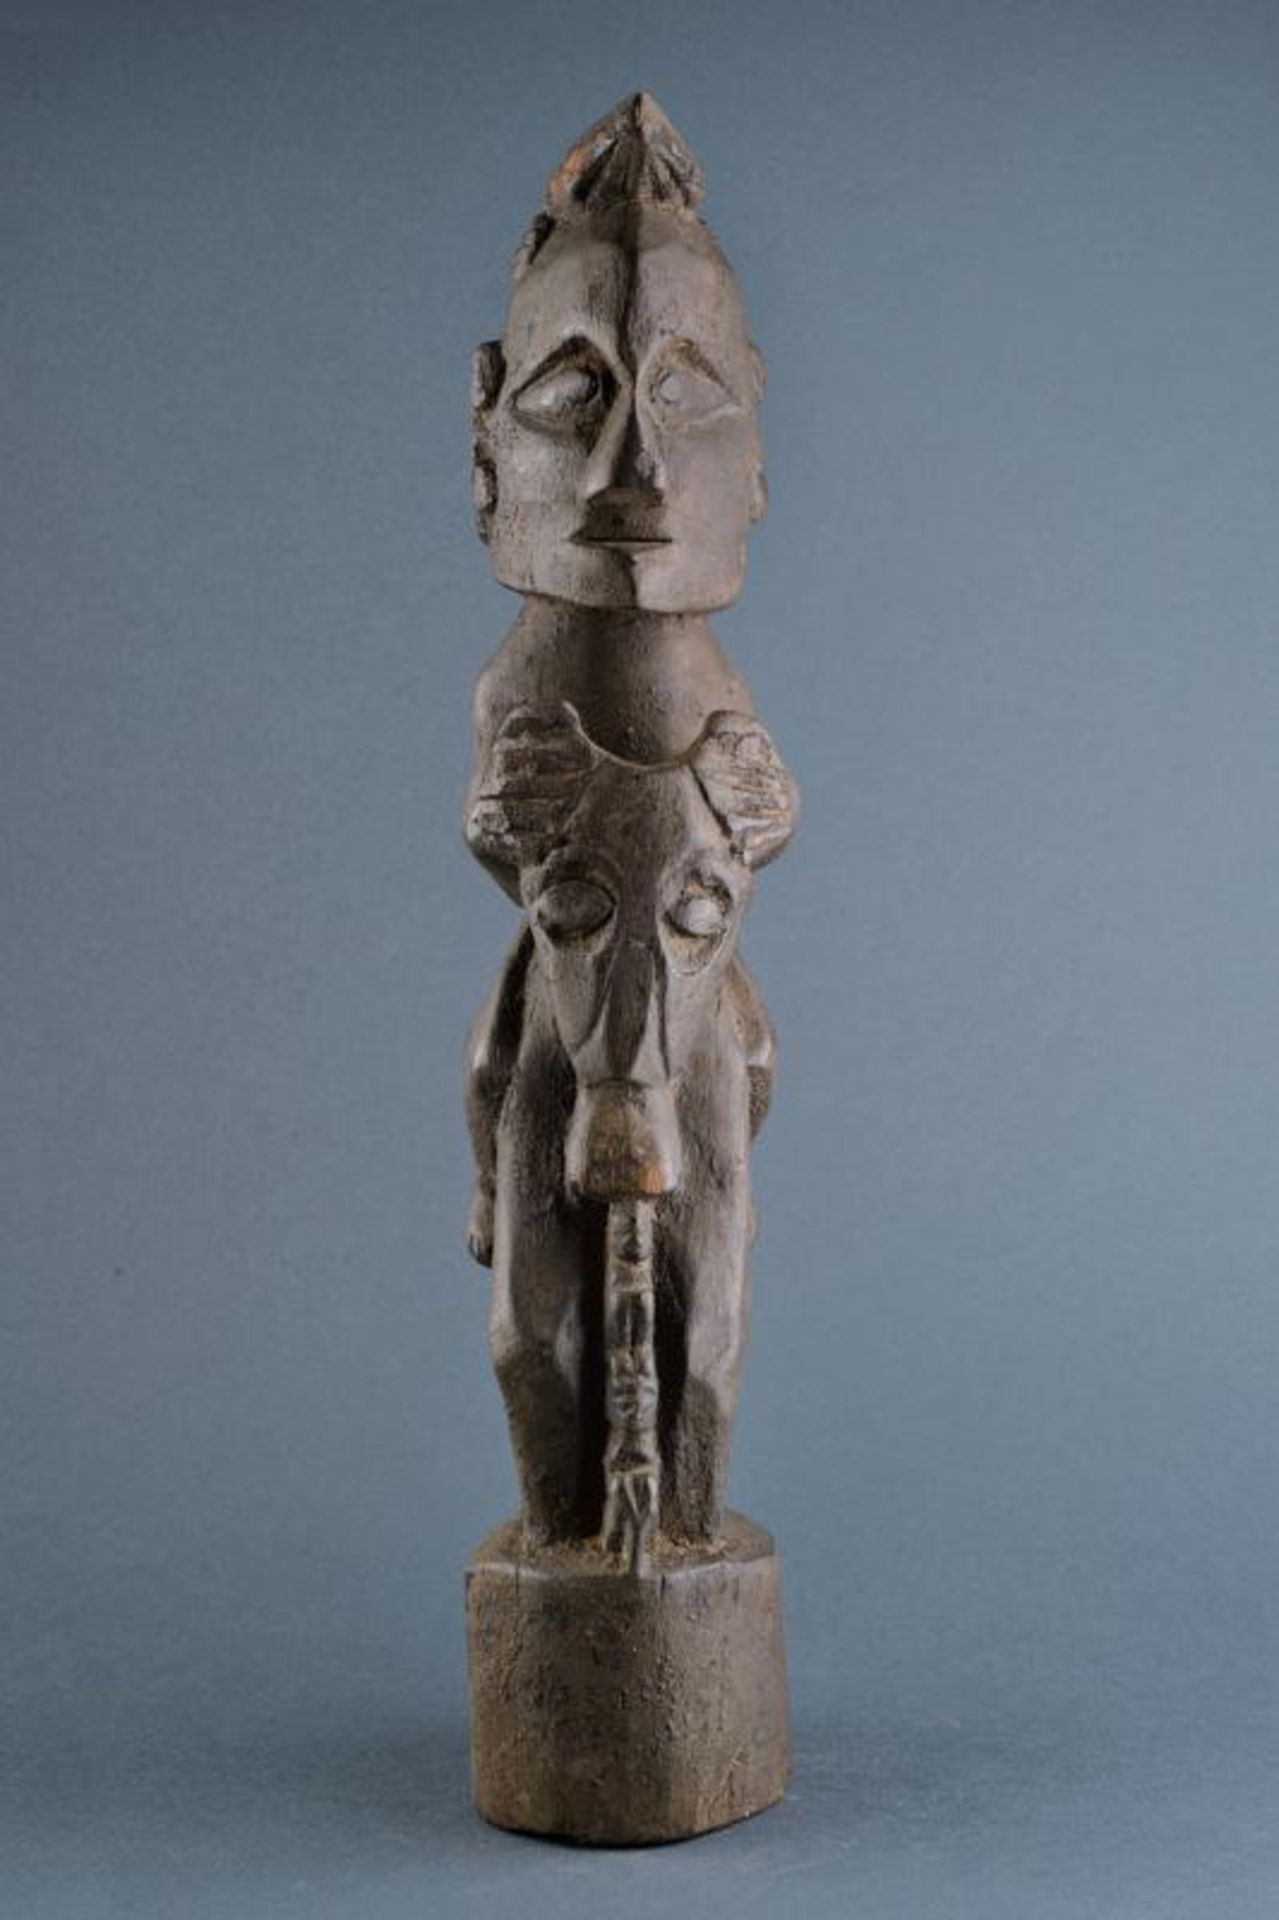 Tribal Art - Man on horse figure - Image 2 of 2